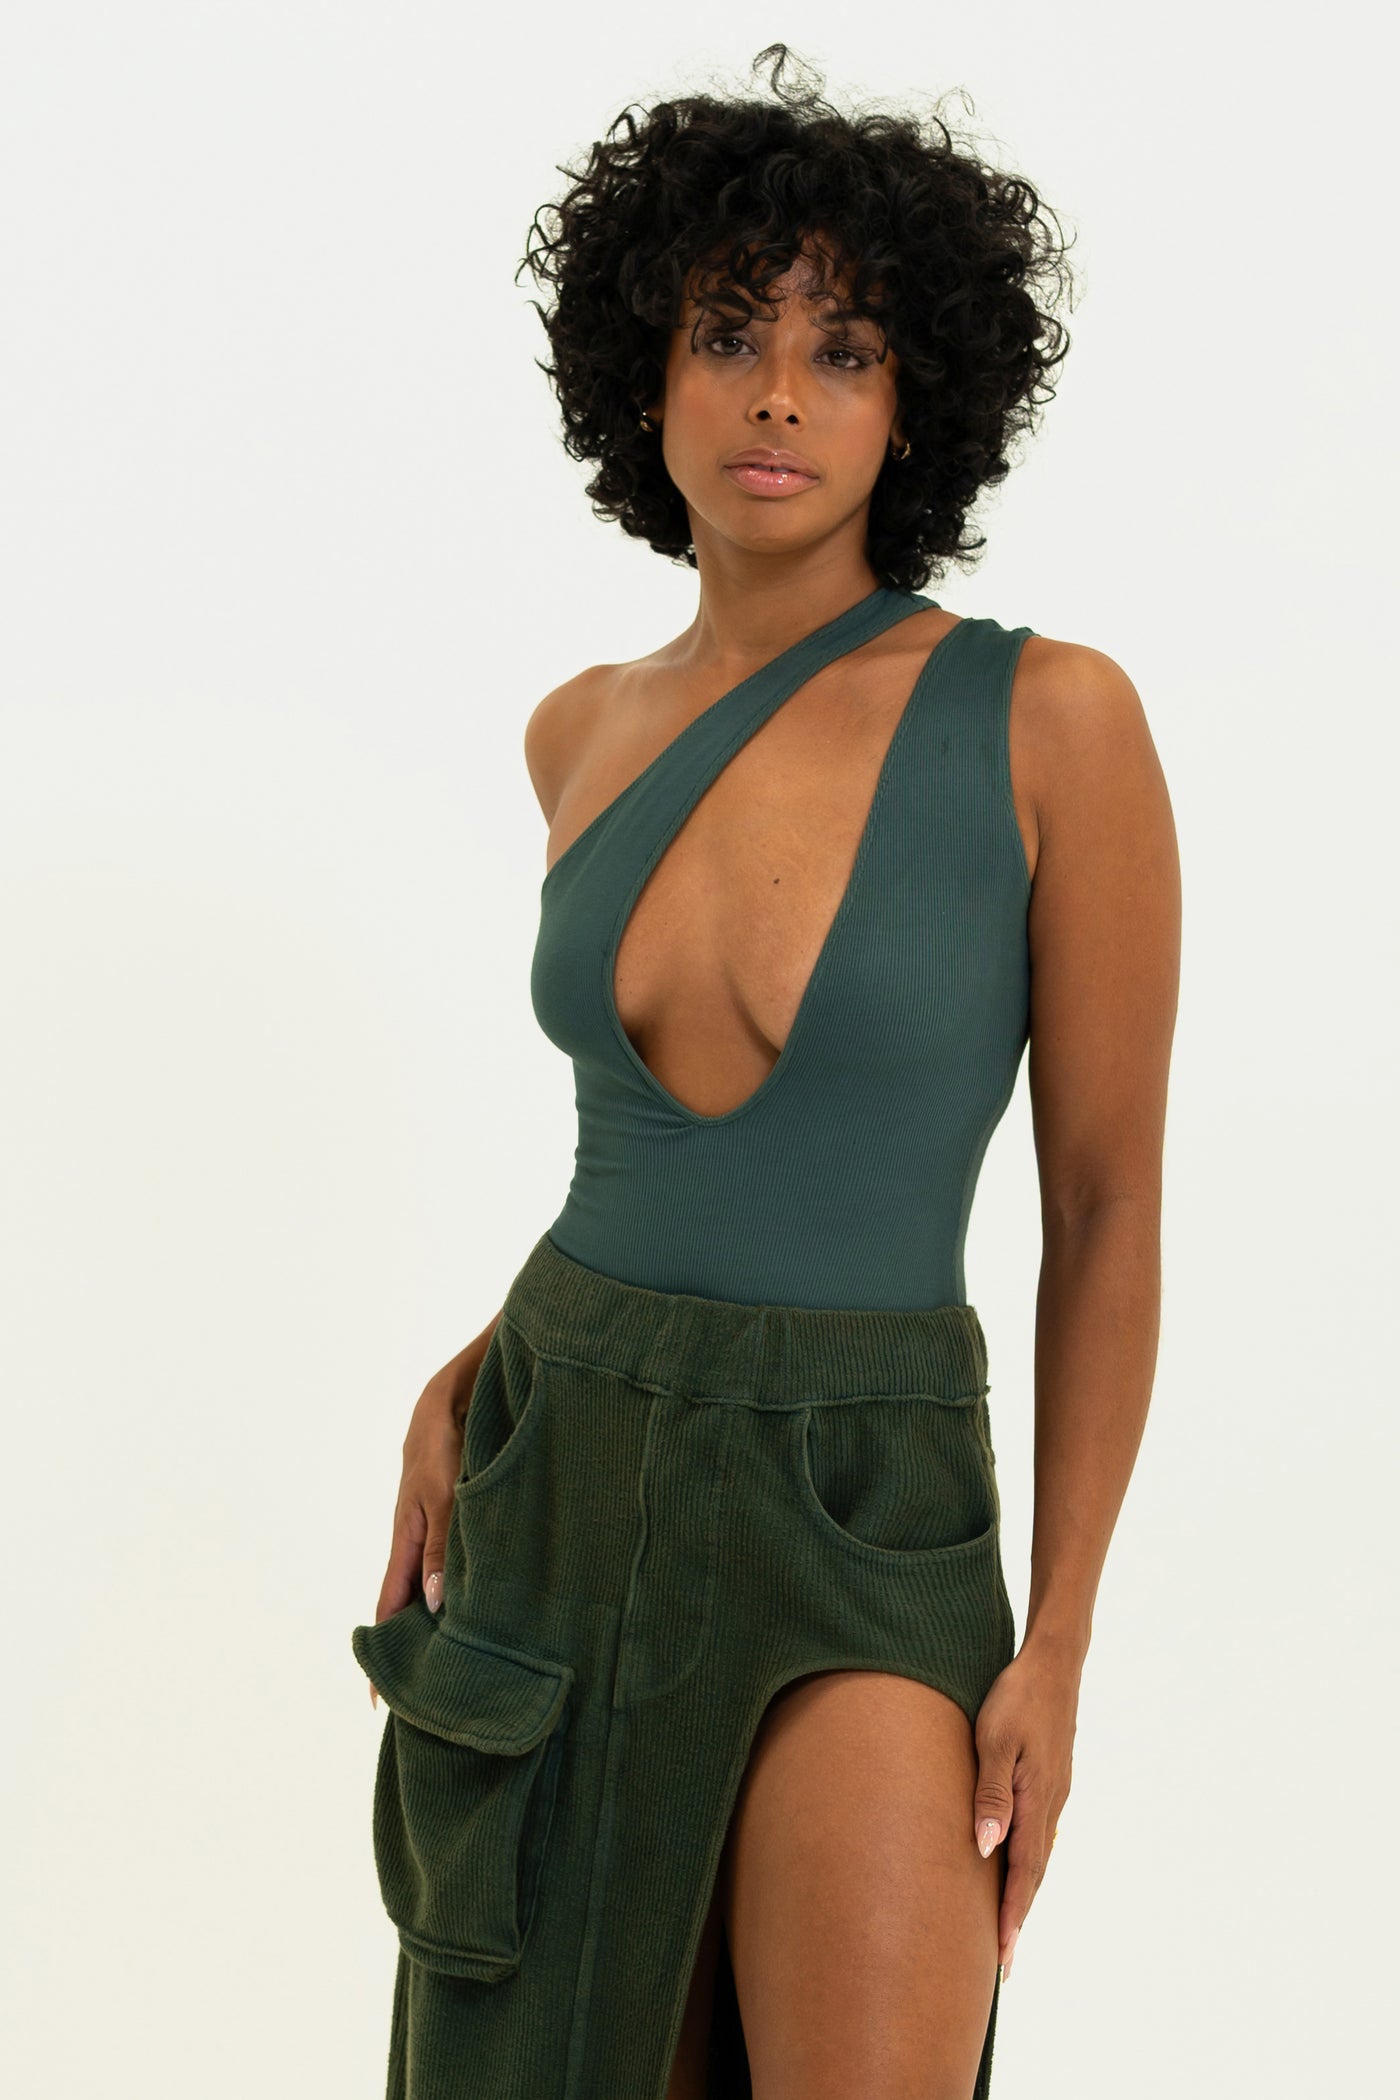 Model showcasing the Vintage Souls lightweight Bodysuit in Olive green color.